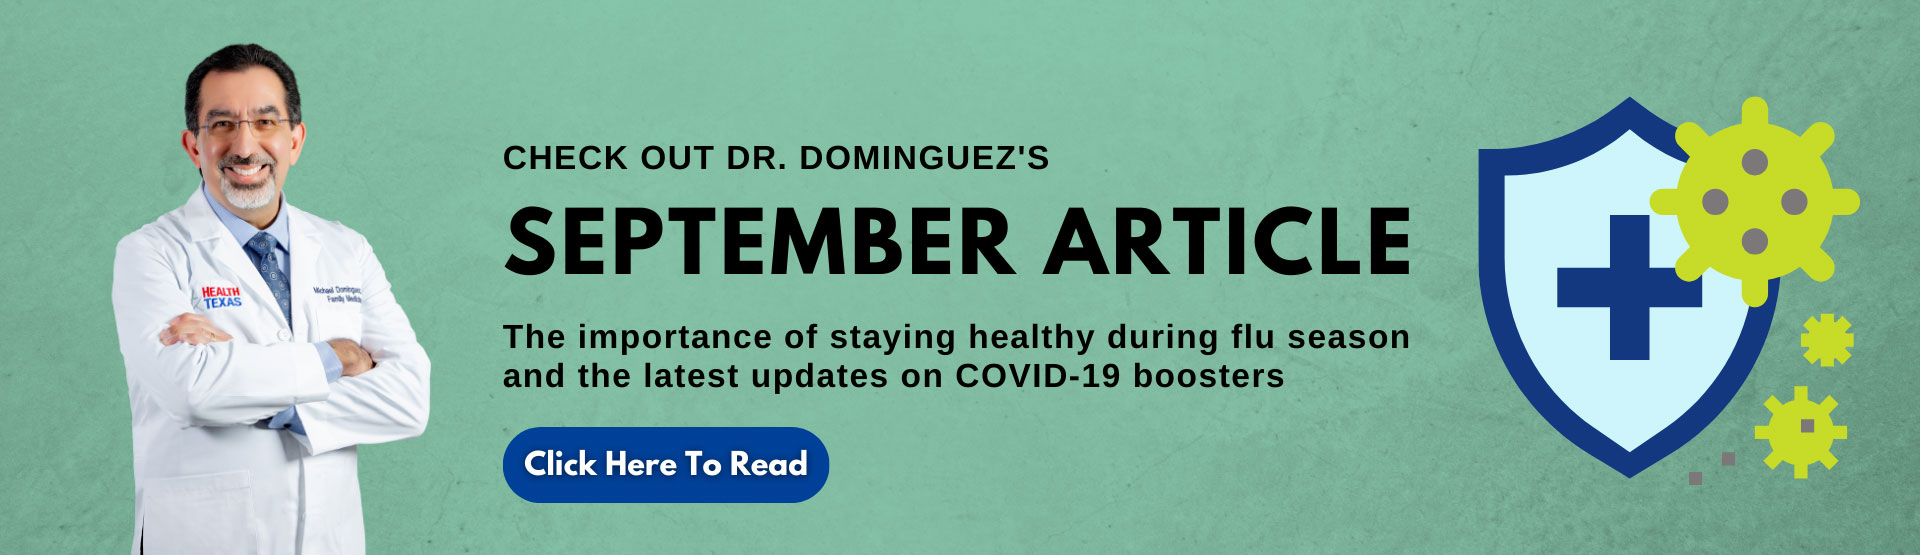 Dr. D's September article web banner